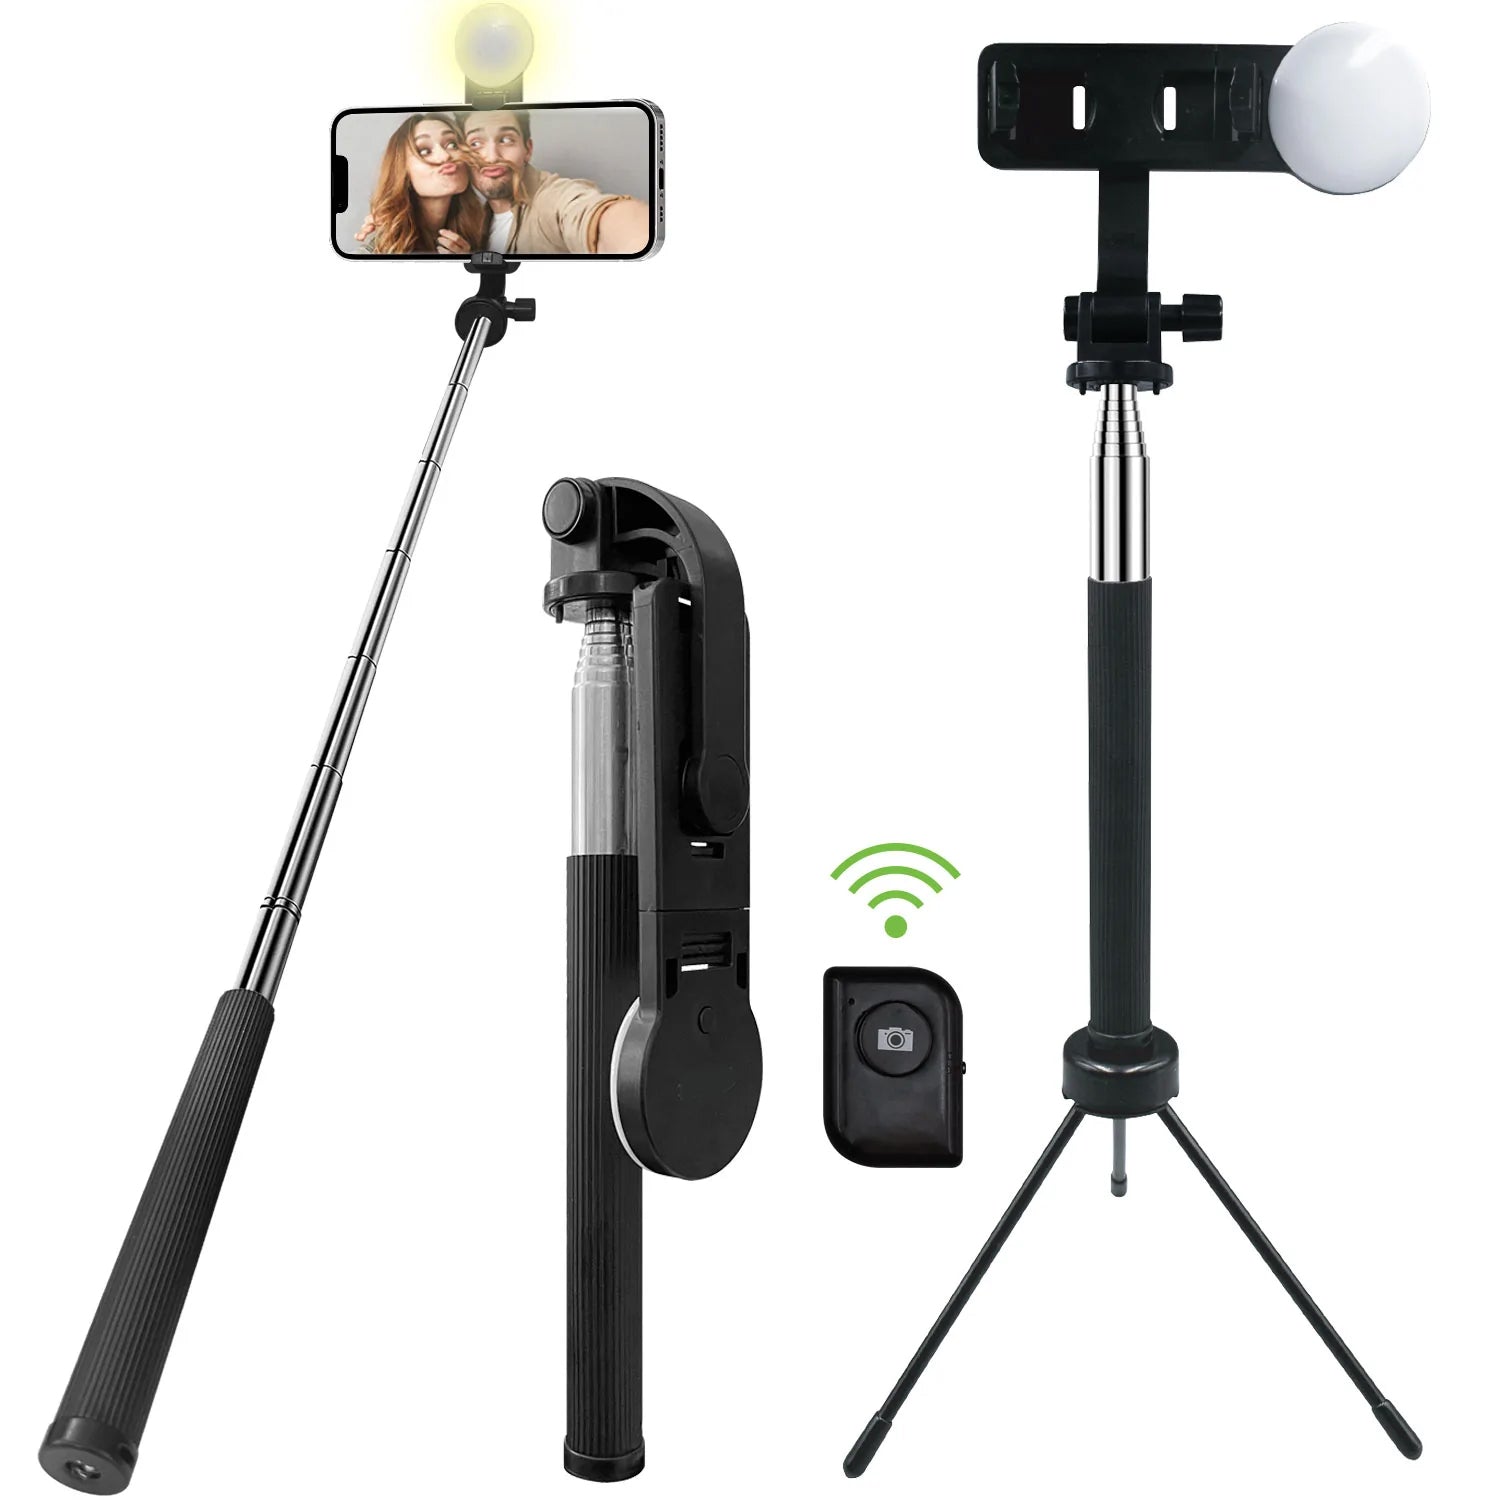 Selfie Stick Wireless Built-in Tripod Remote Shutter Stand Self-Portrait  - ONZ98 1712-8